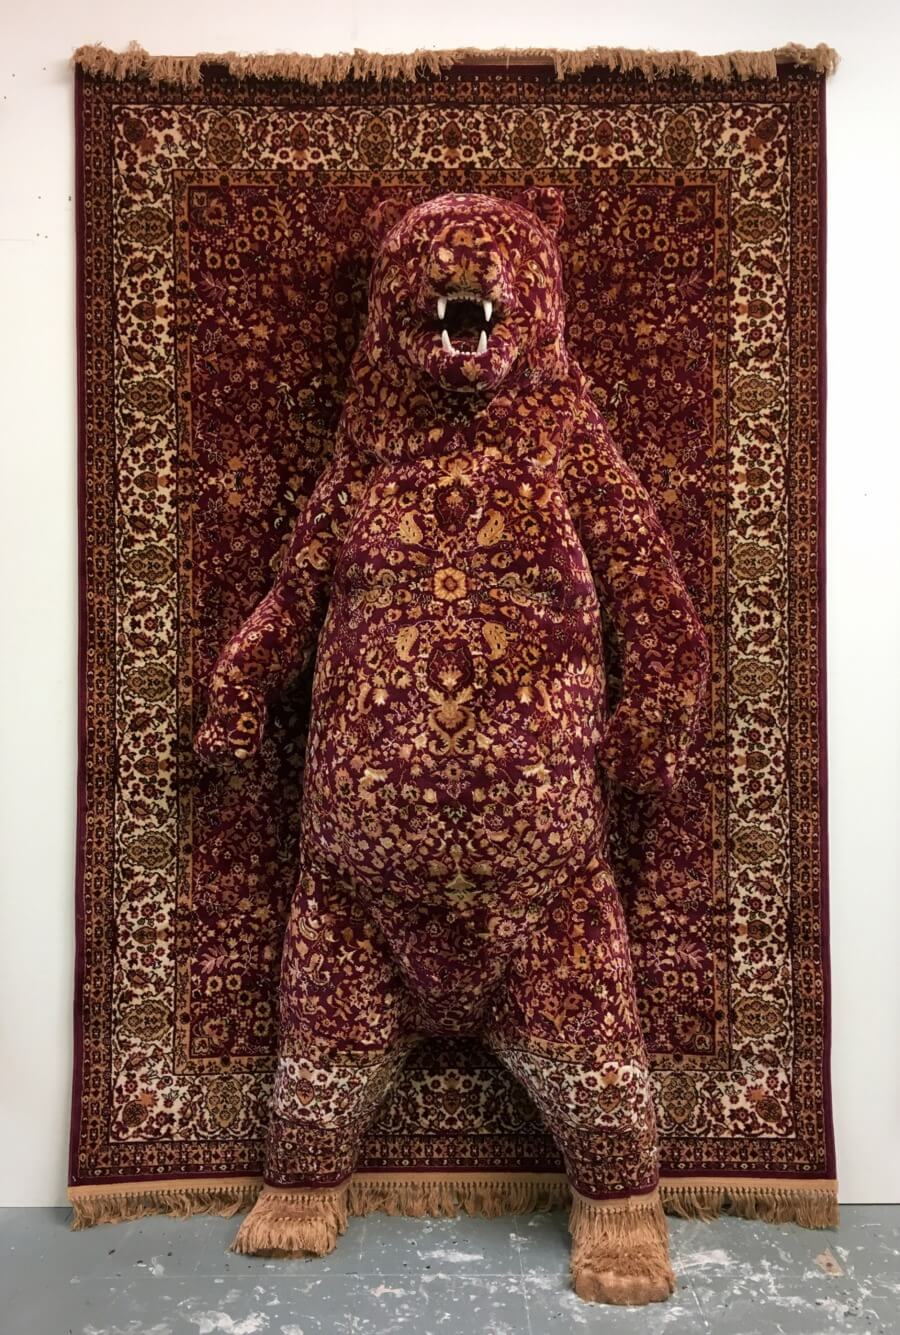 Red bear, esculturas con alfombras prsas